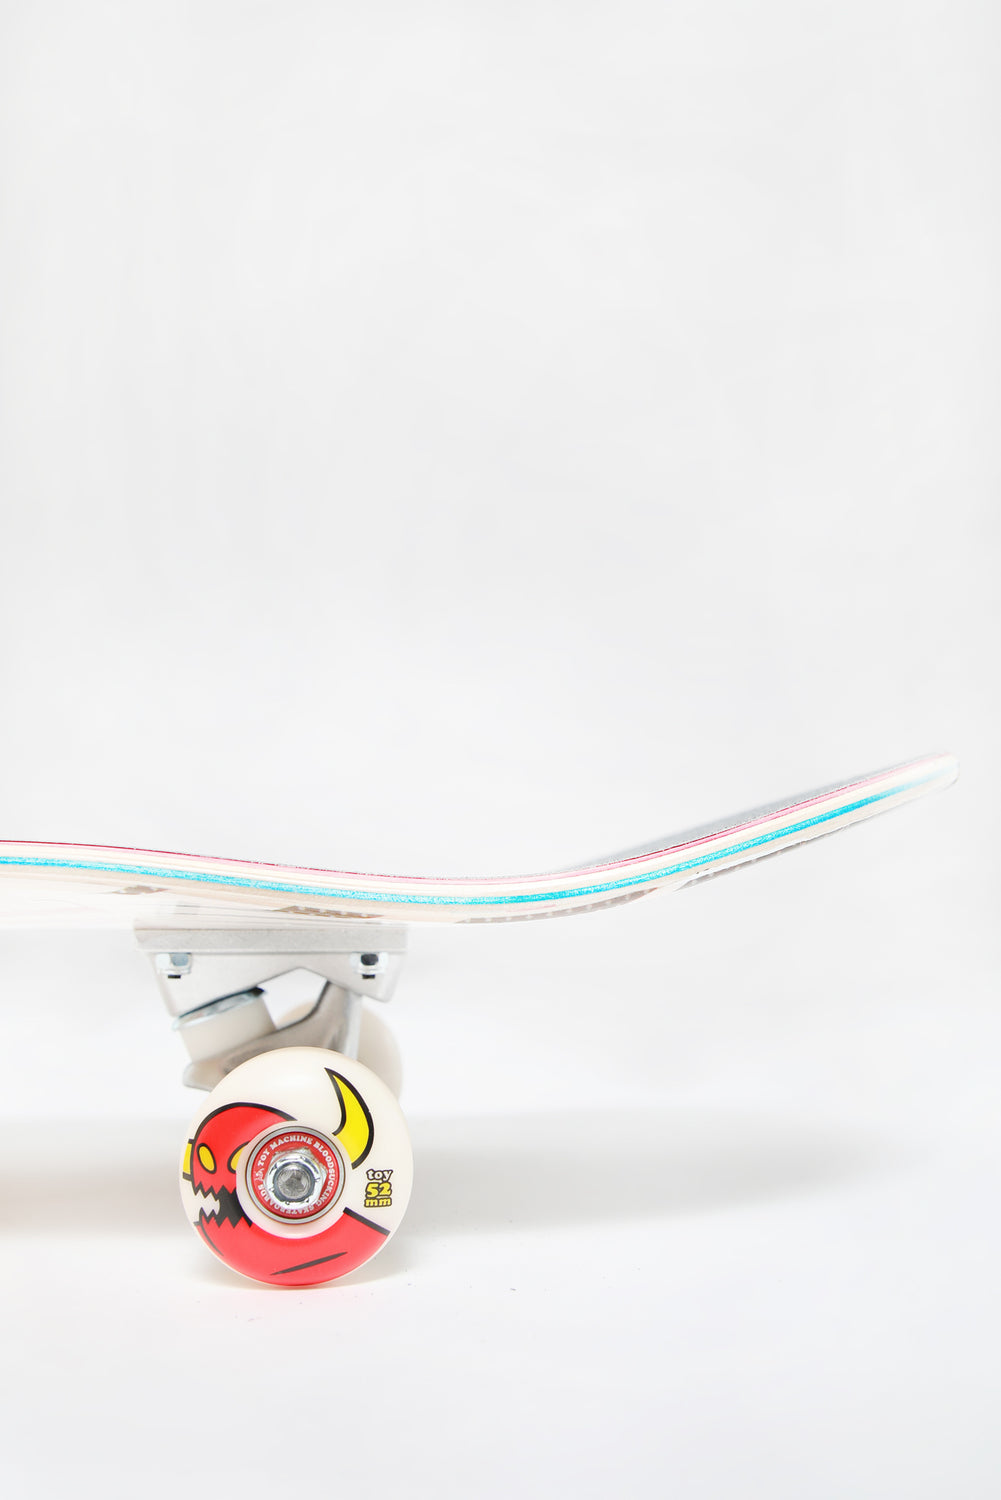 Skateboard Moon Man Toy Machine 8.5